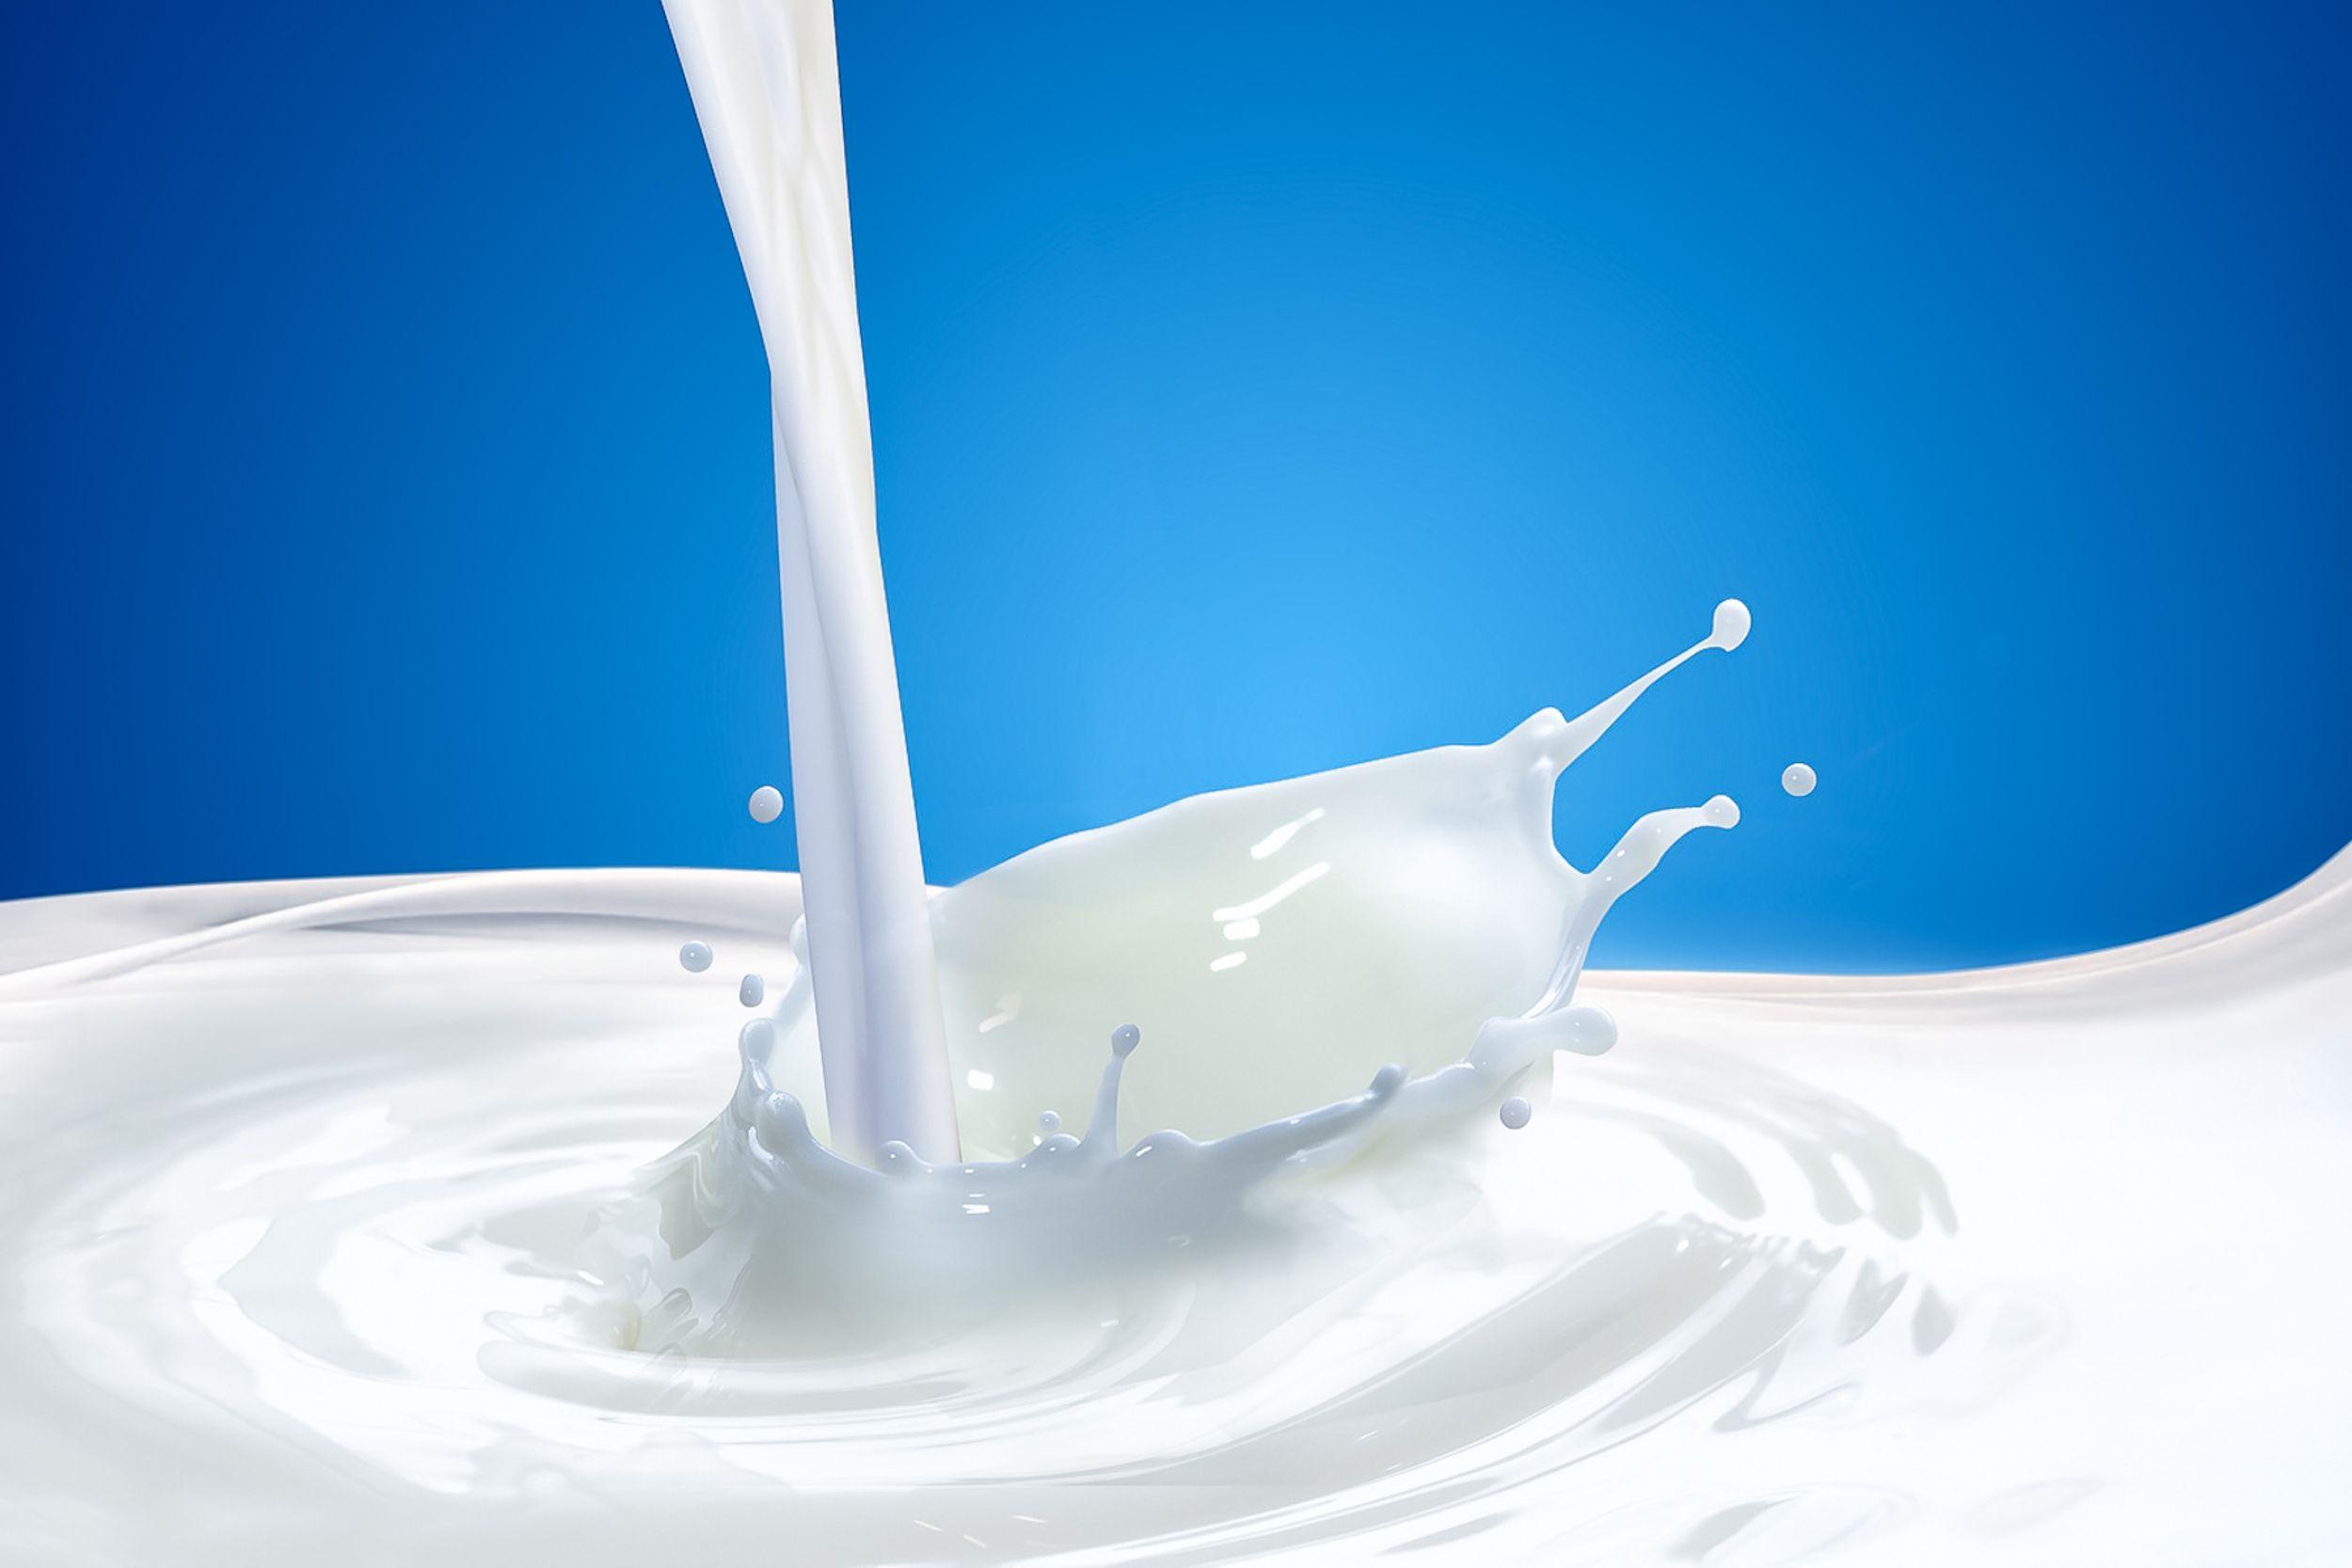 Milk Wallpapers - Top Free Milk Backgrounds - WallpaperAccess